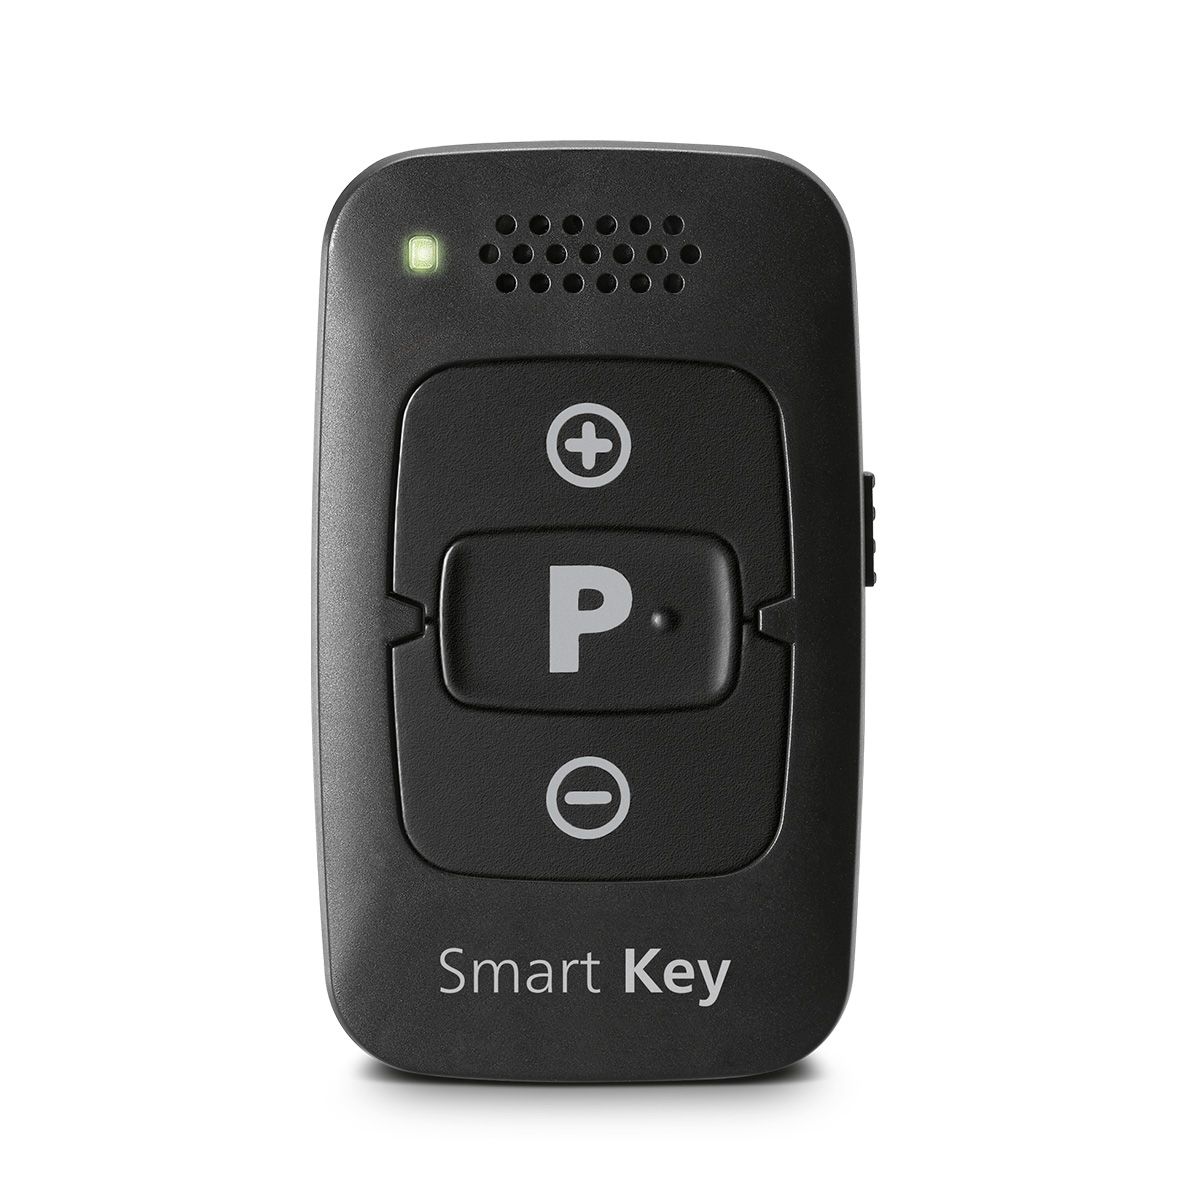 Rexton Smart Key remote control for Rexton hearing aids